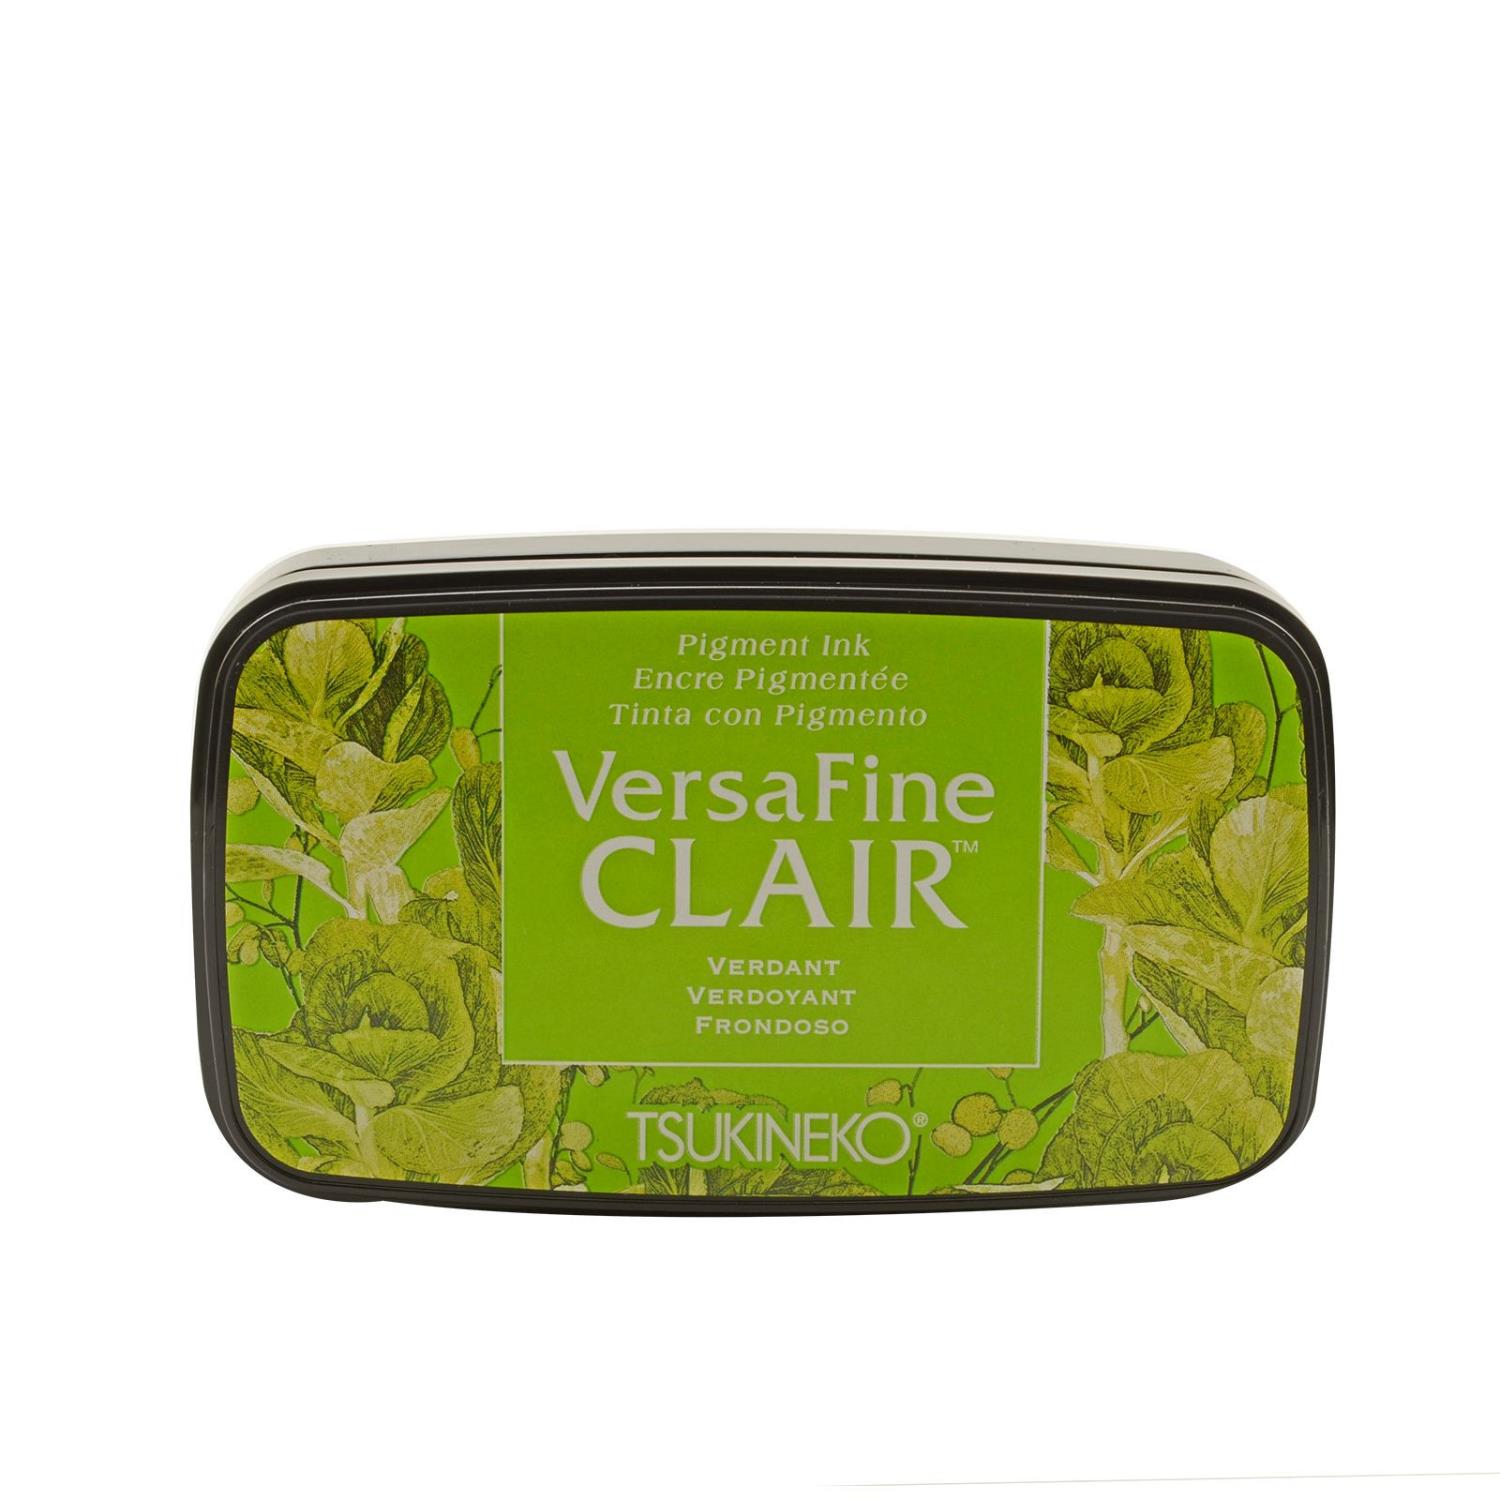 VersaFine - clair - verdant